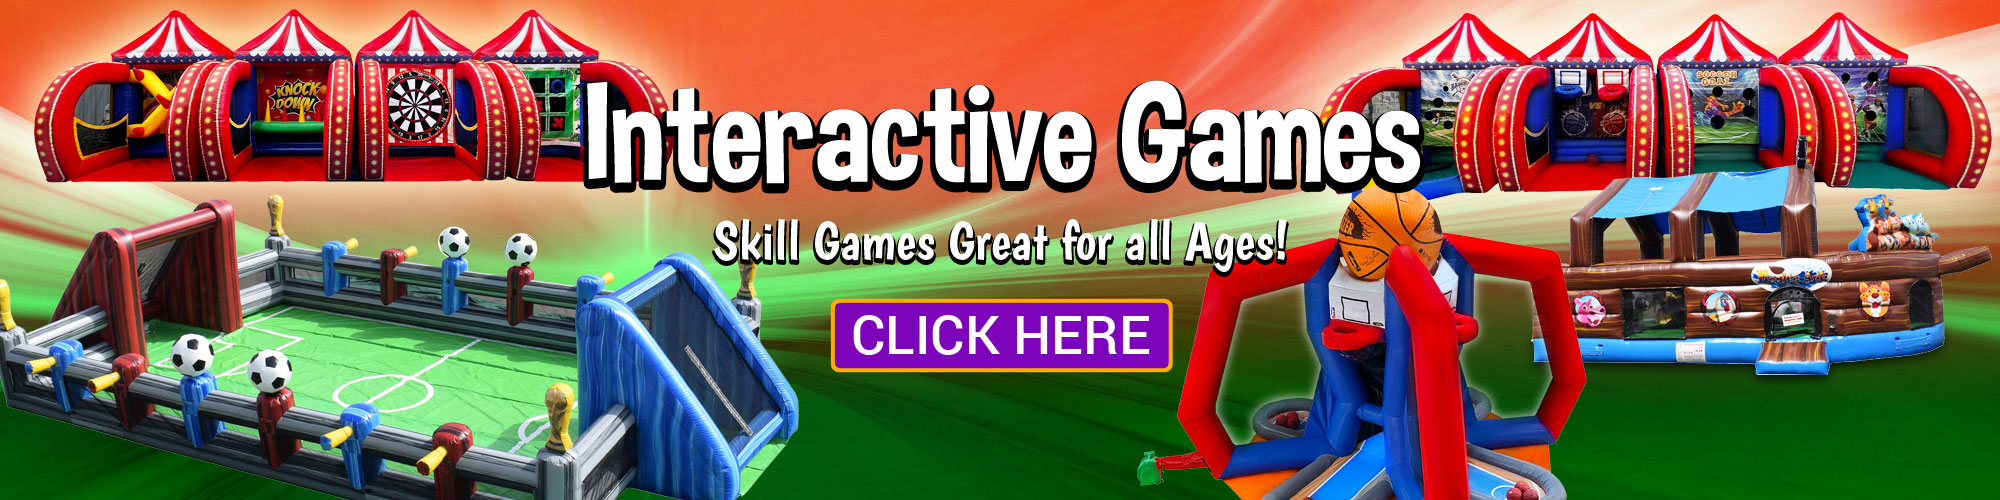 groveland interactive game rentals